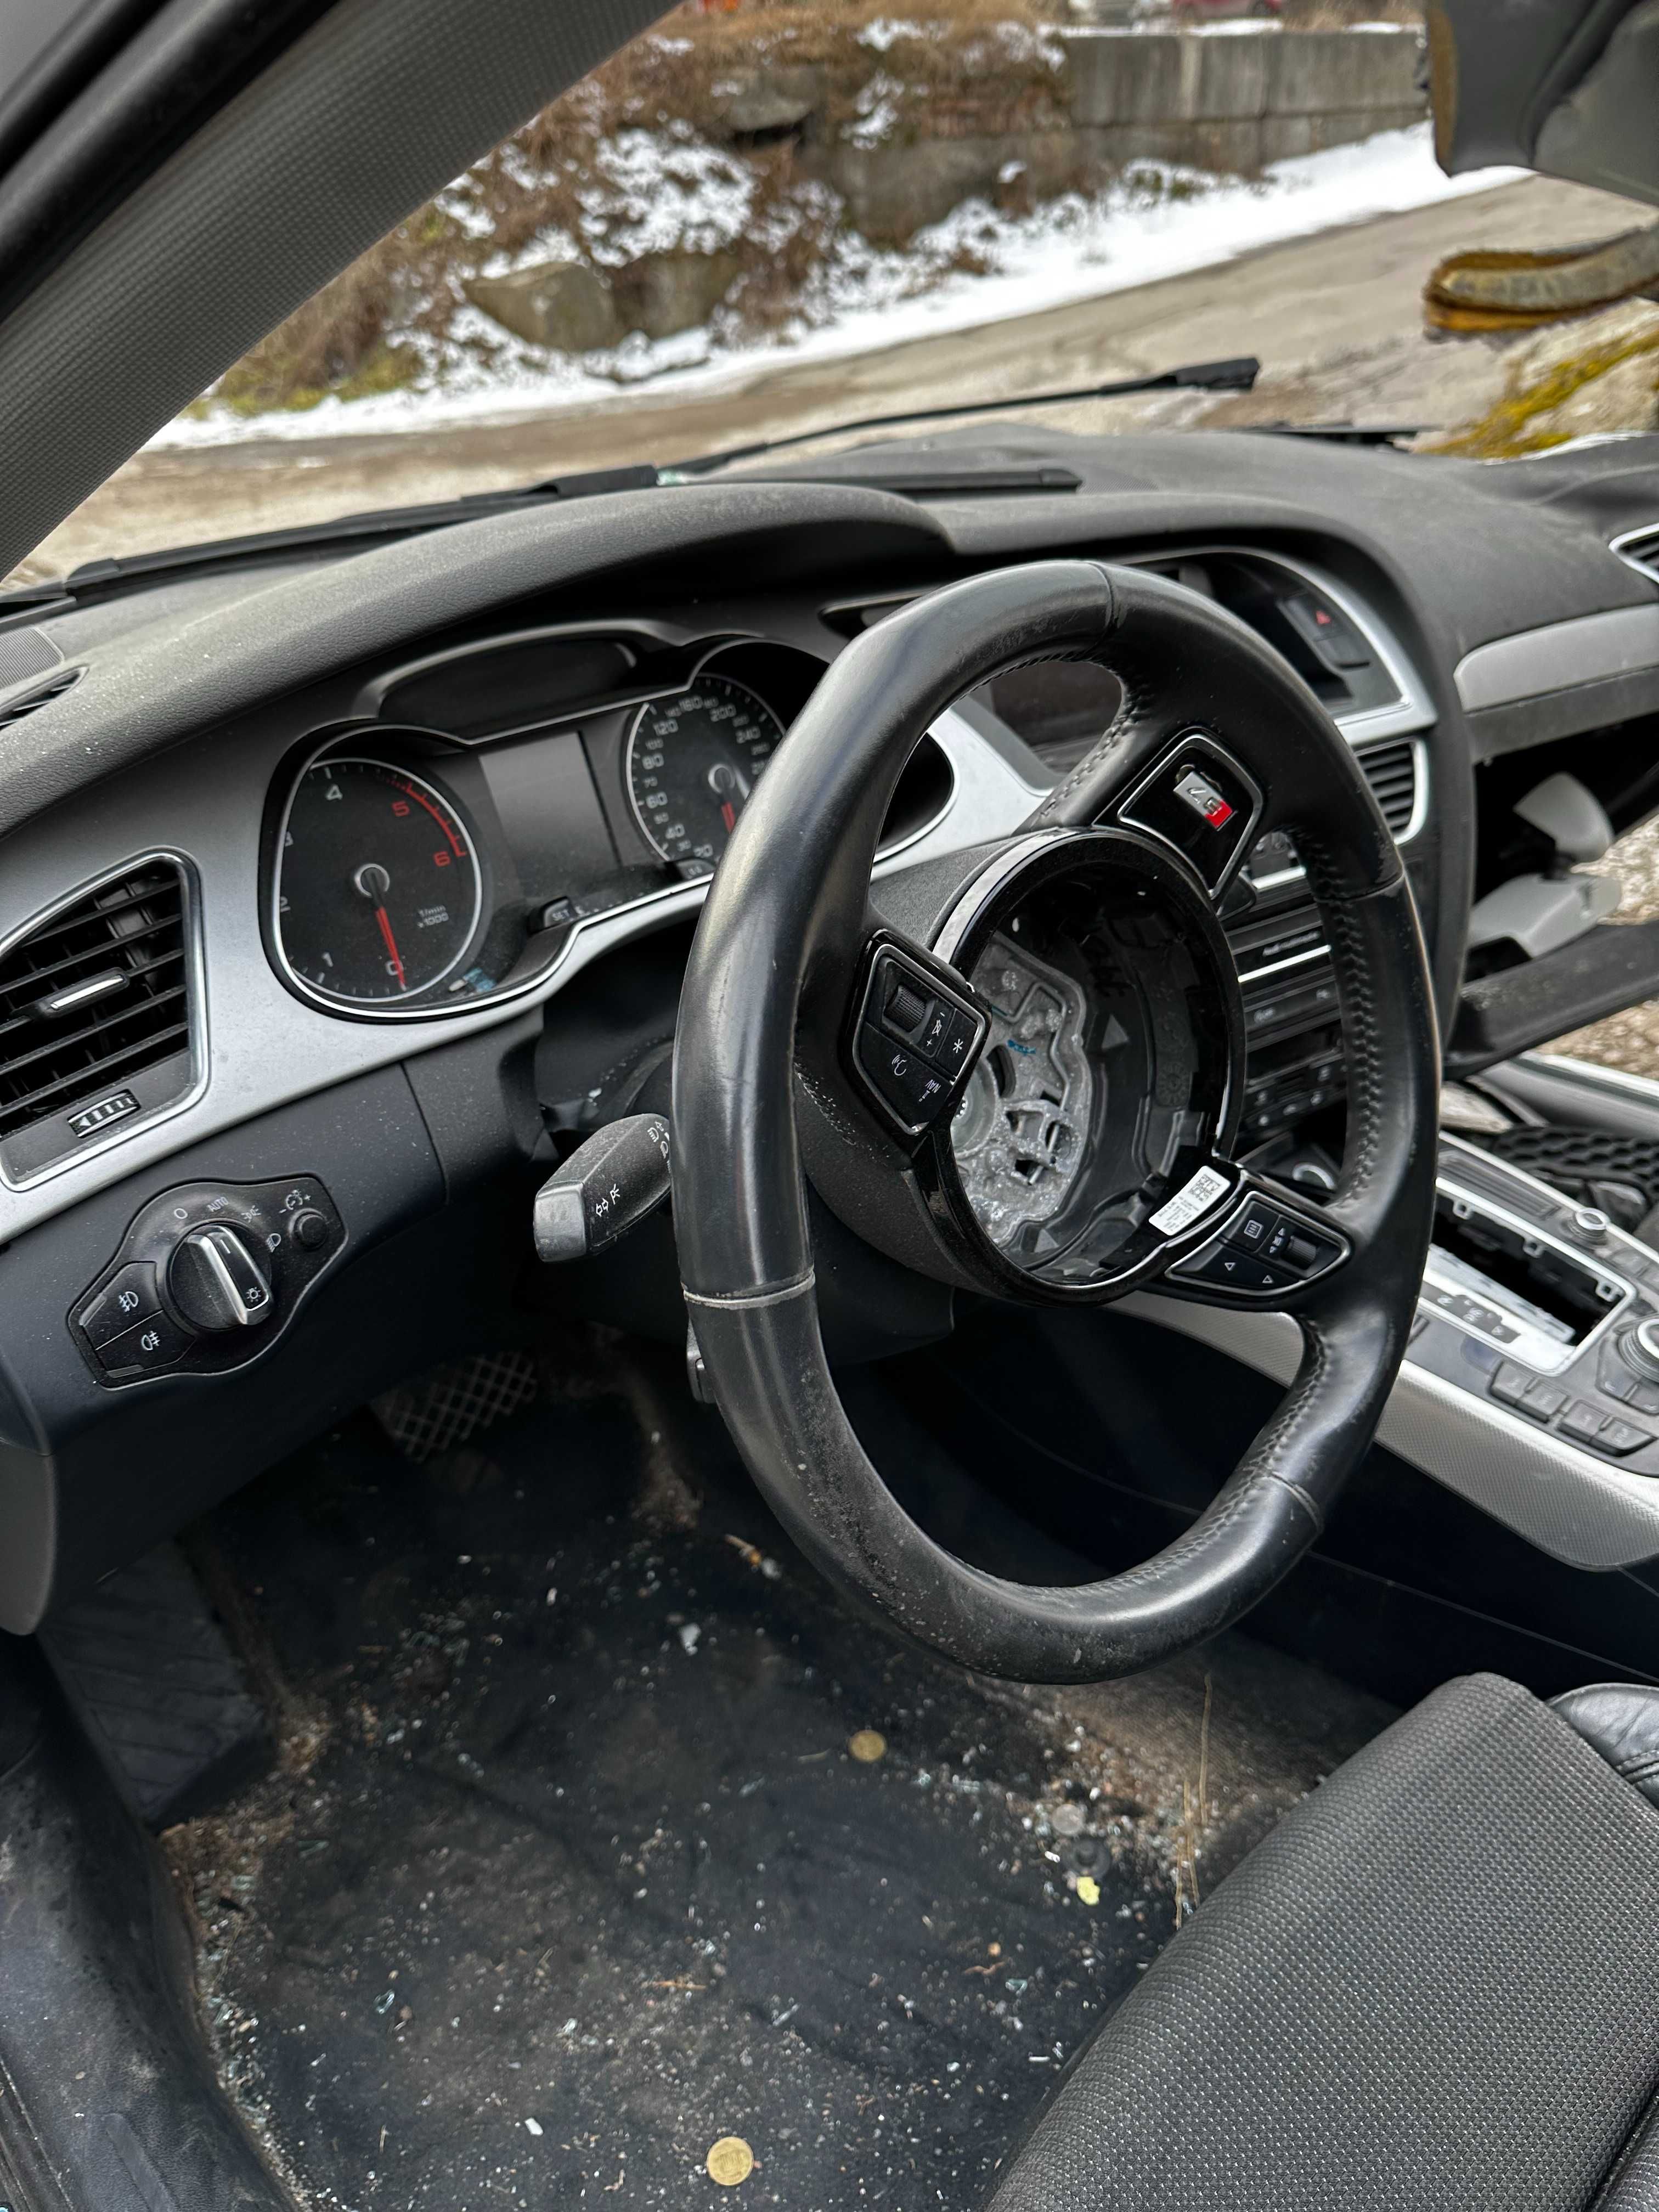 Панель климат-контроля блок климата Audi A4 B8 Ауди А4 Б8 Запчасти